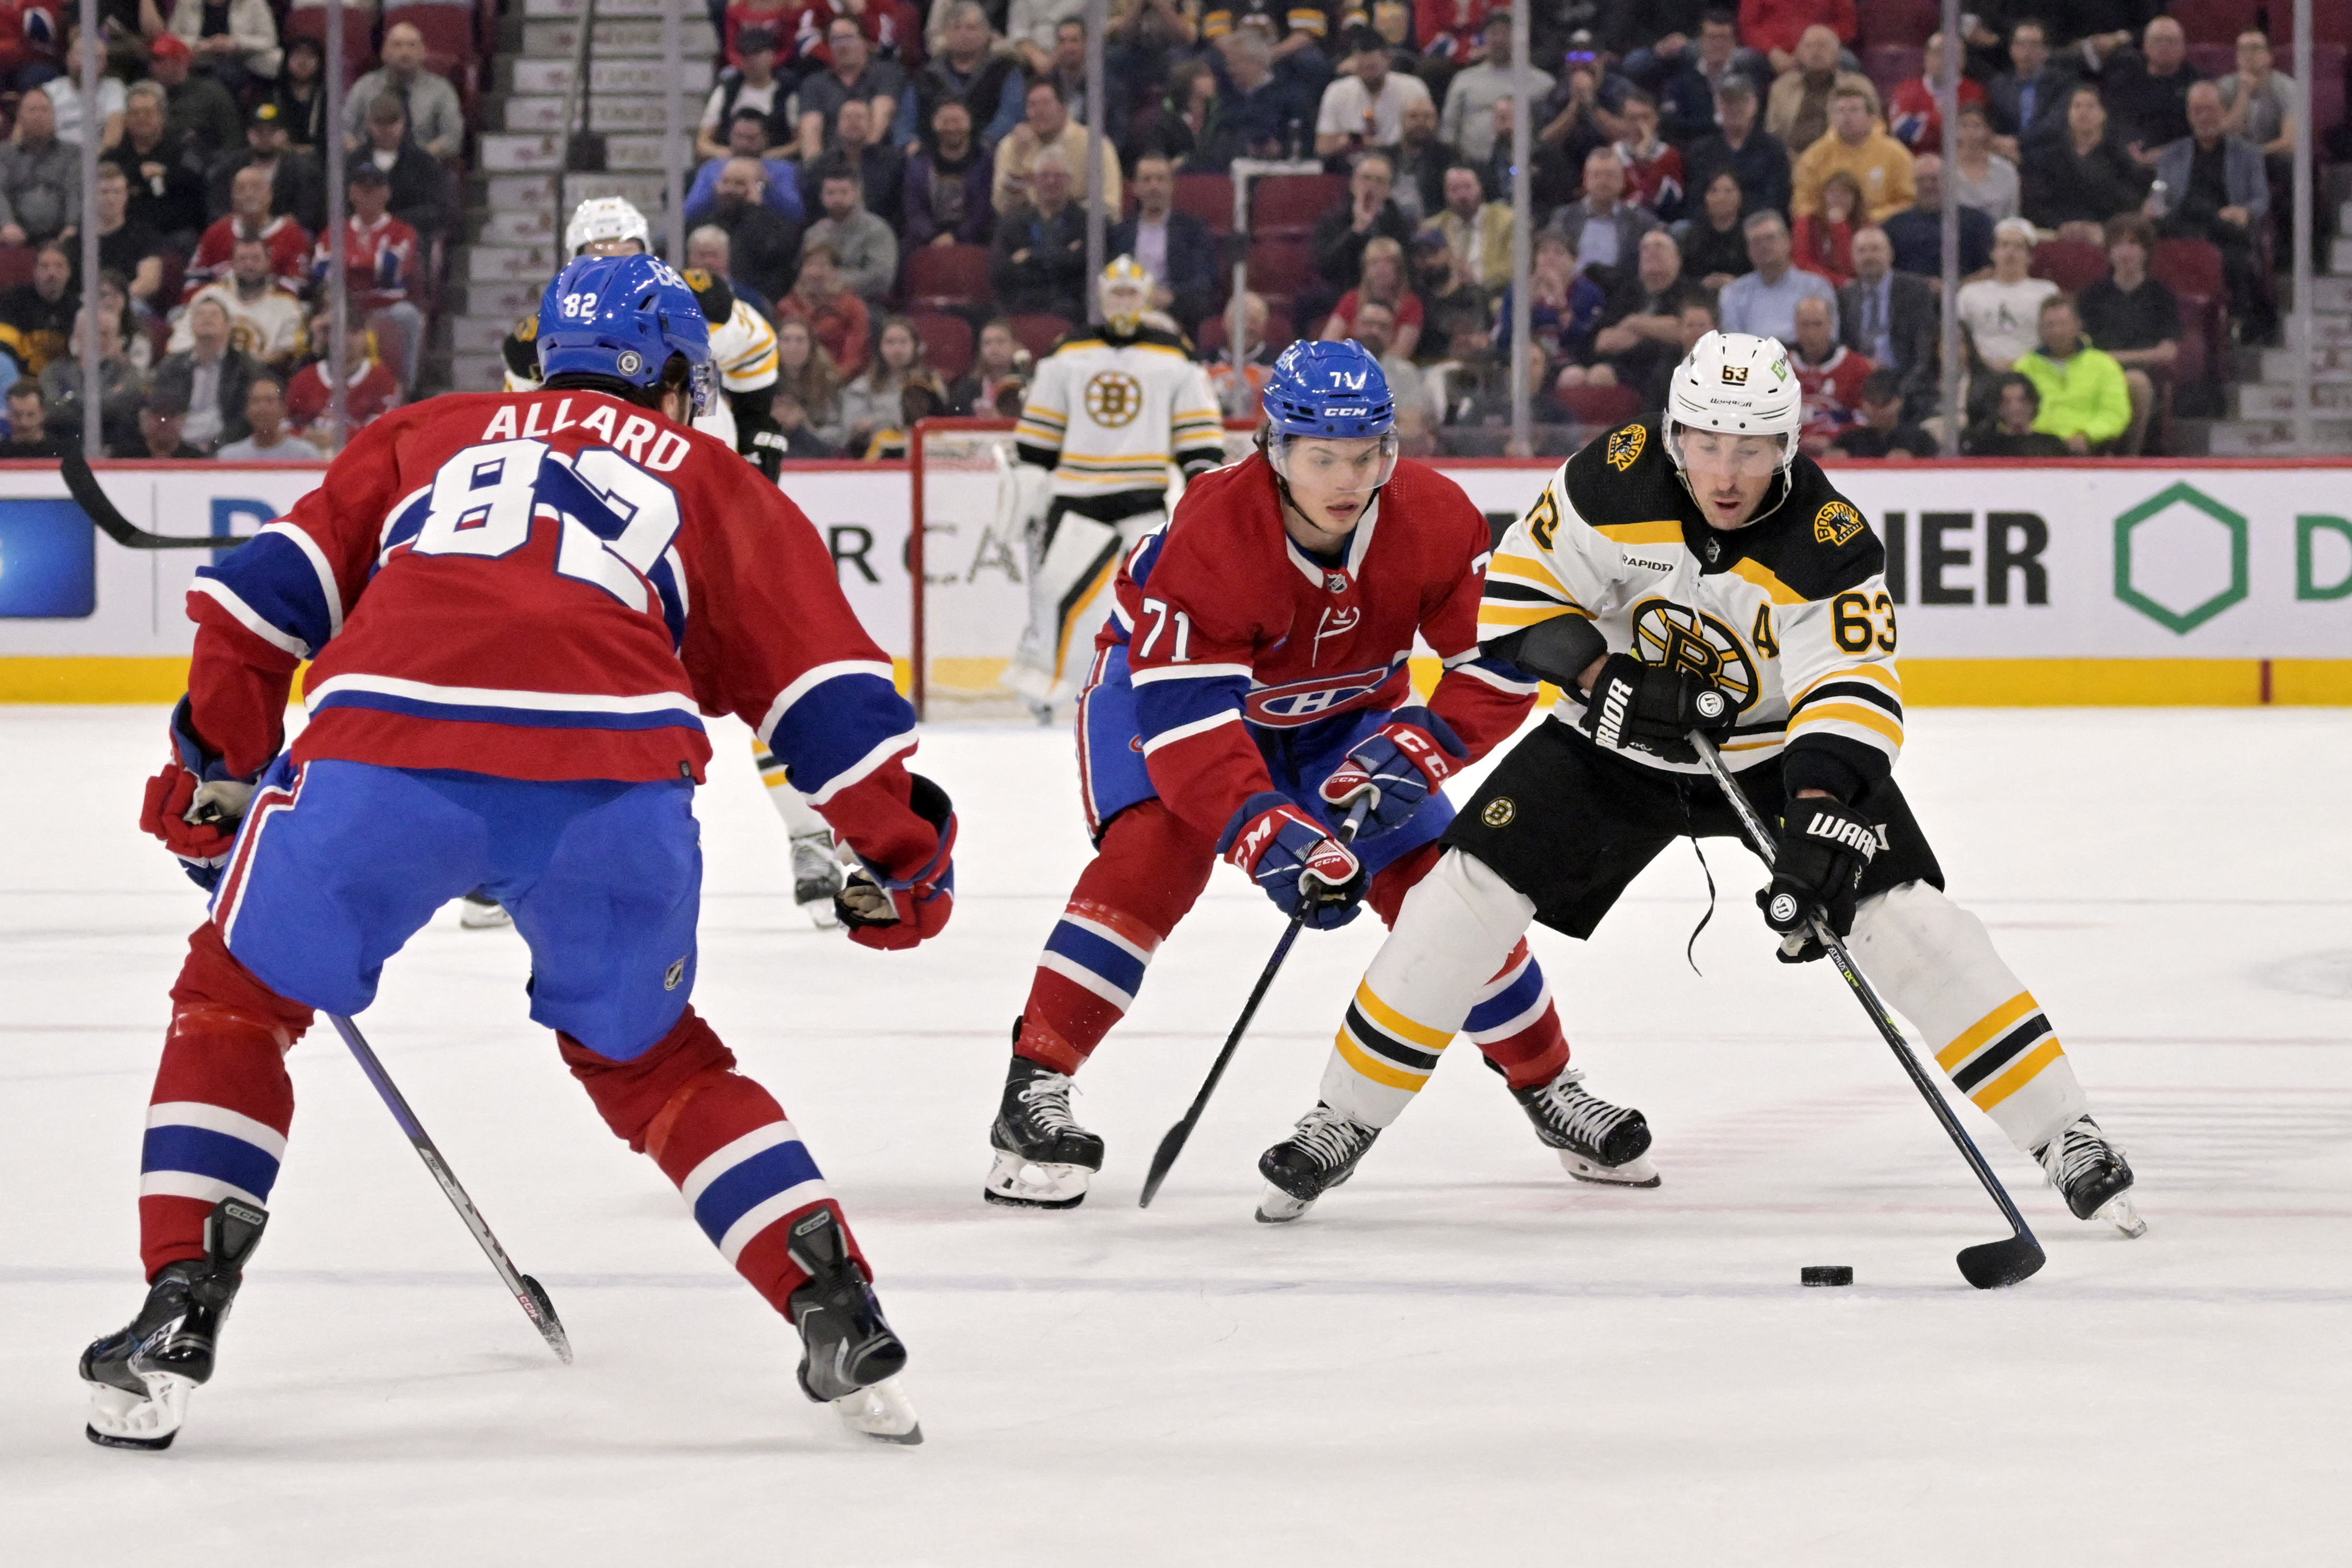 Boston Bruins NHL Single Season Wins Record Framed Photo